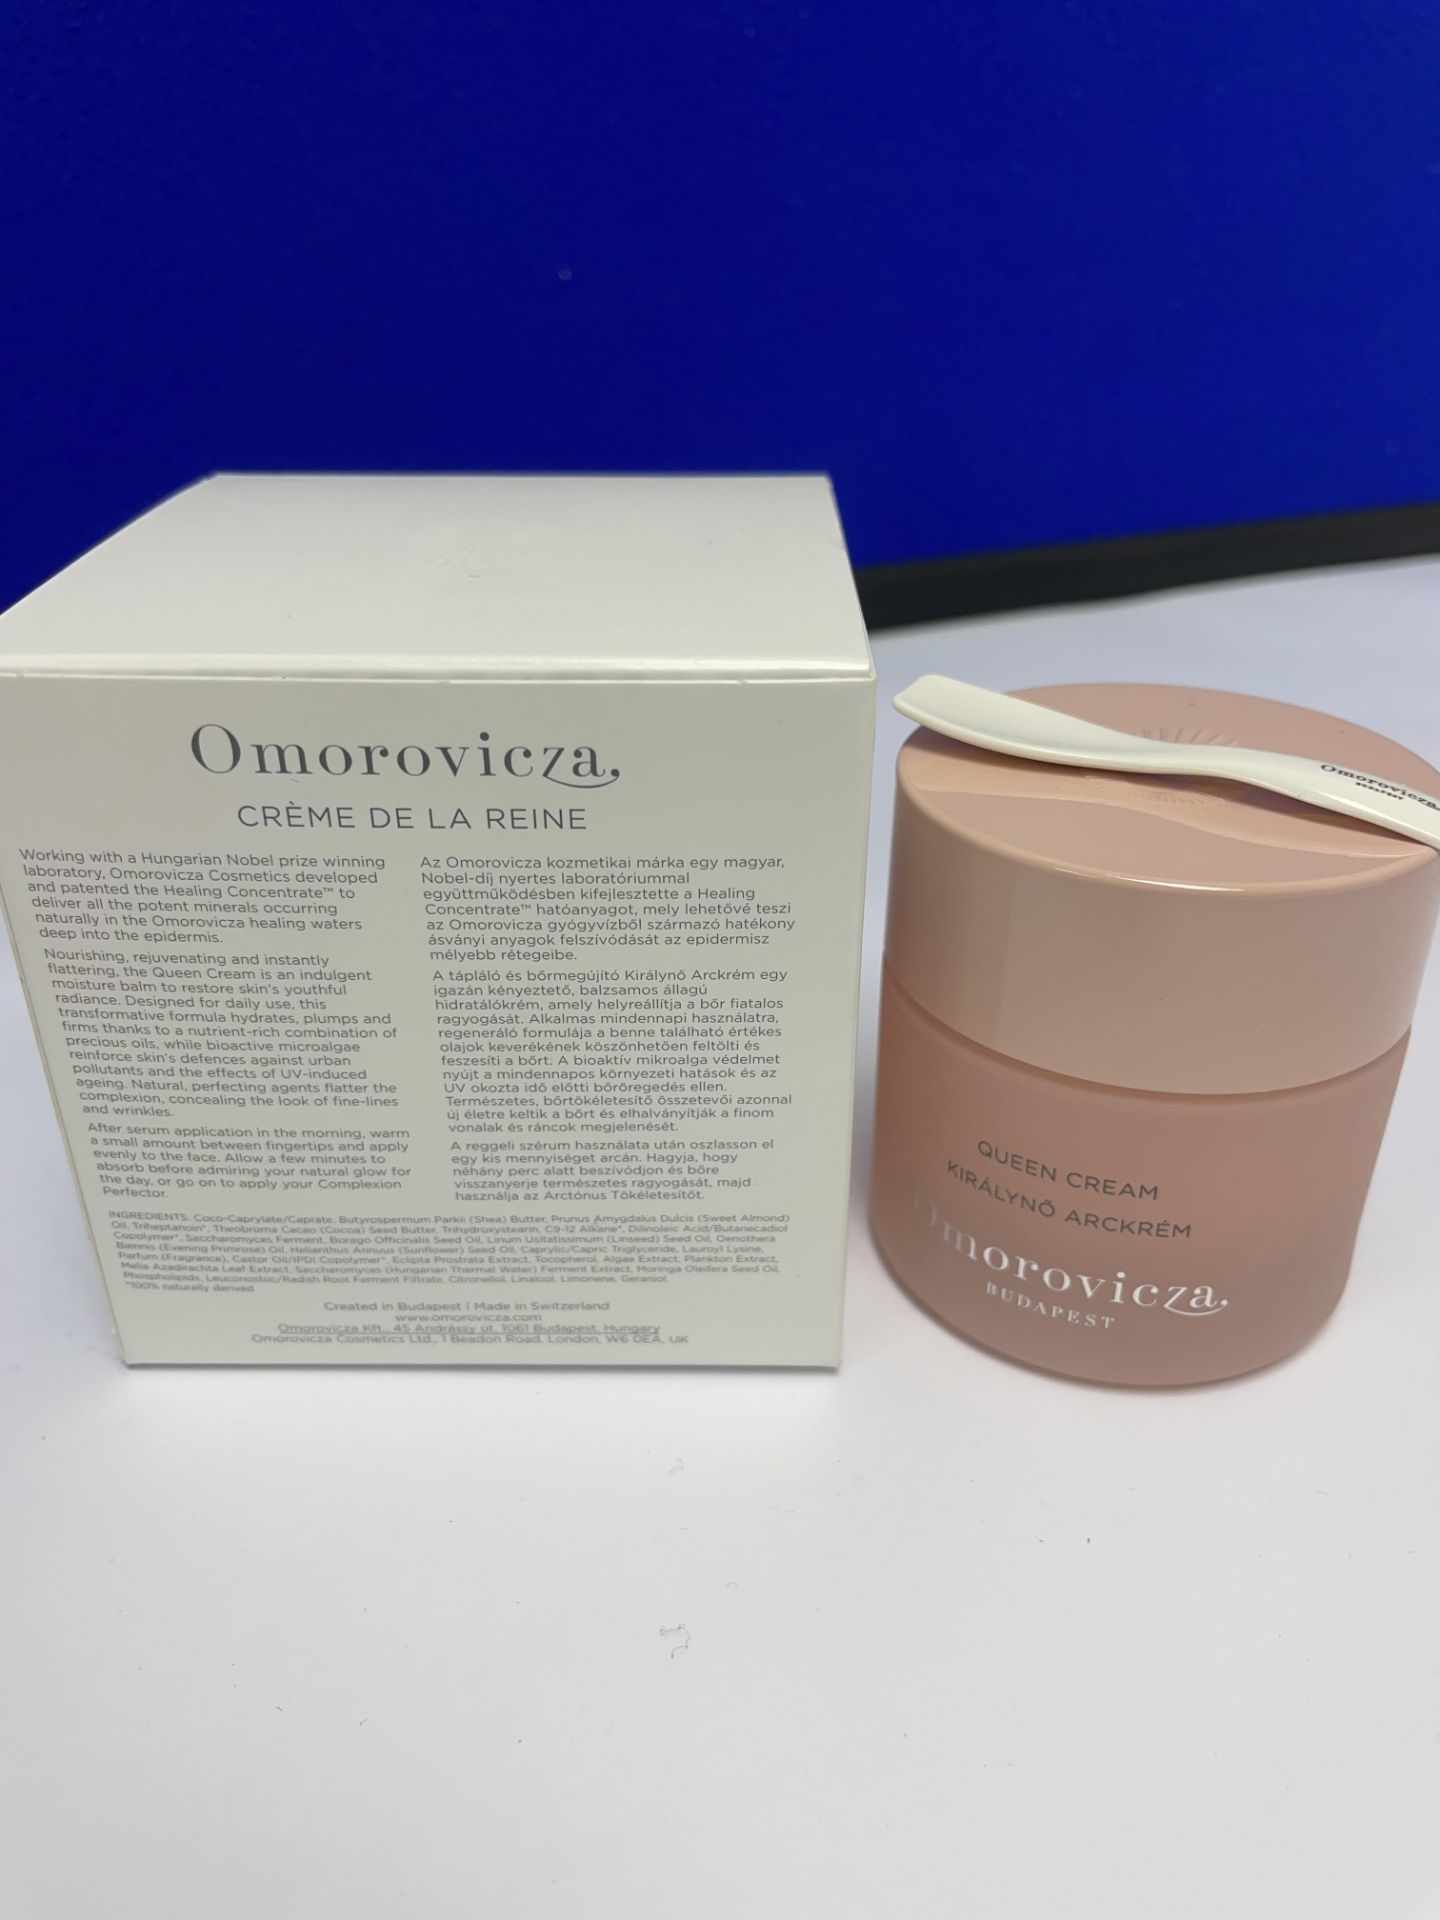 Omorovicza Queen Cream | RRP £135.00 - Image 2 of 2